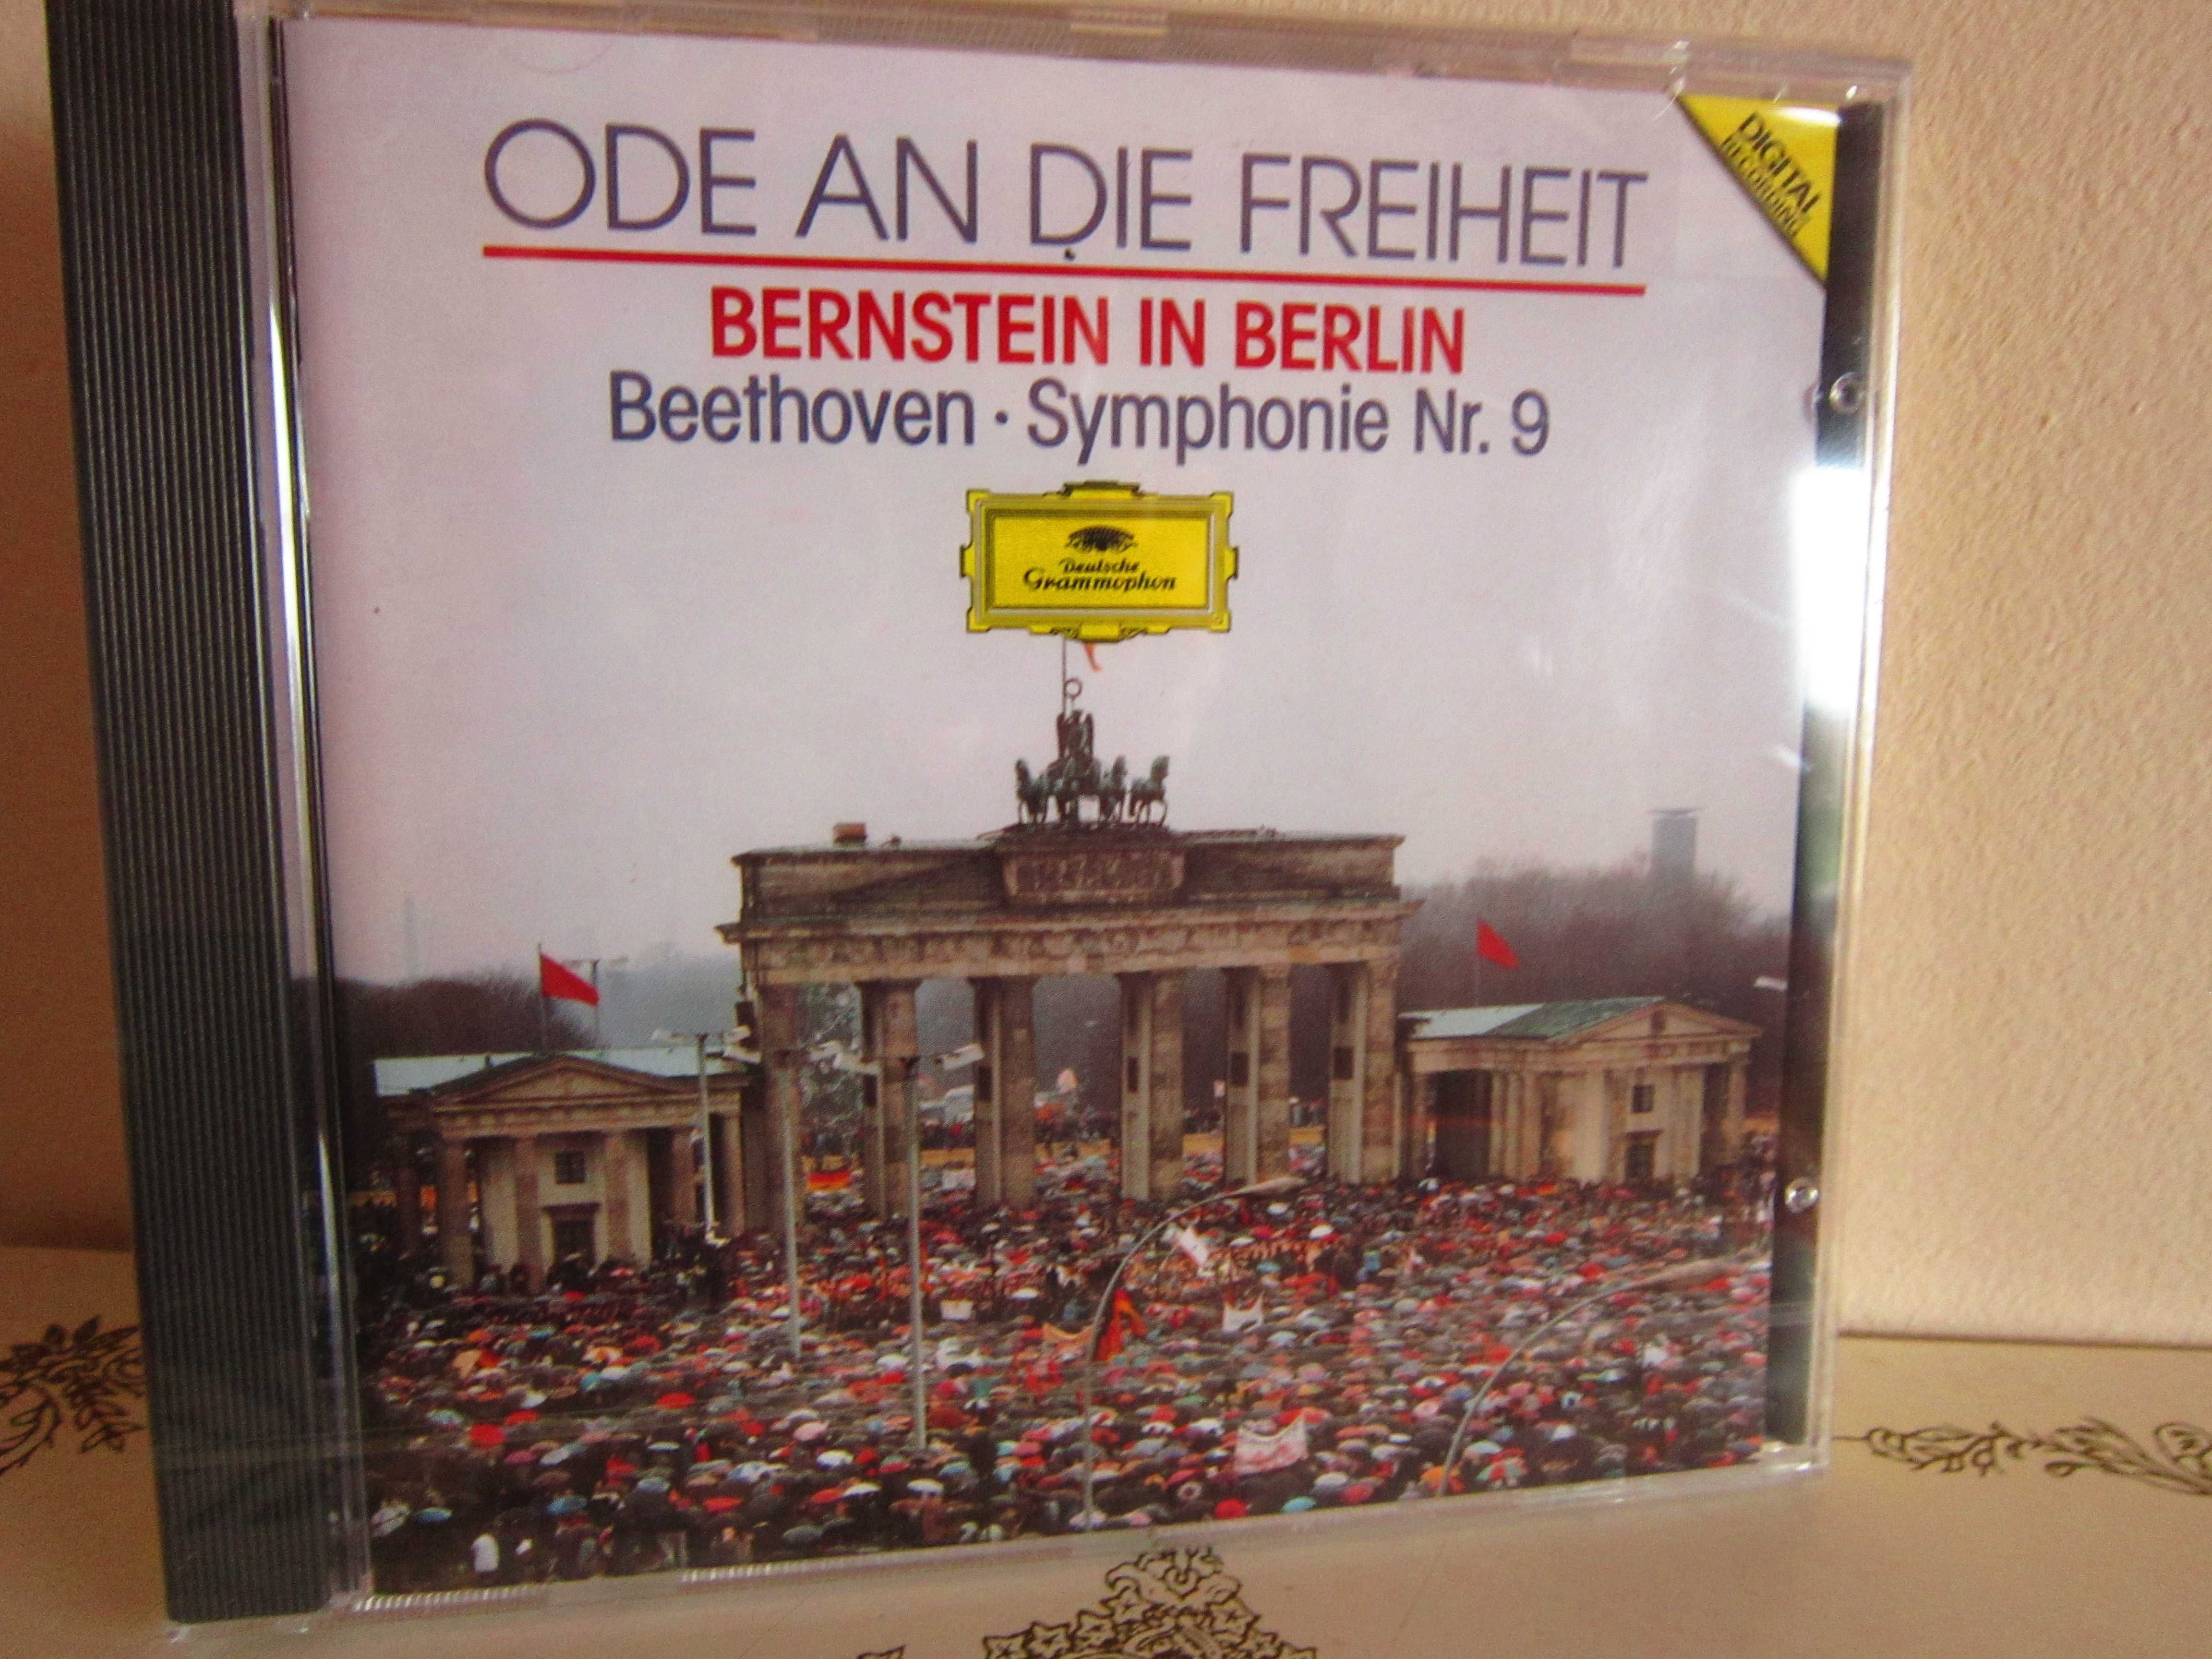 cadou rar Beethoven Oda bucuriei Bernstein Berlin 25.12.1989 Simfonia9